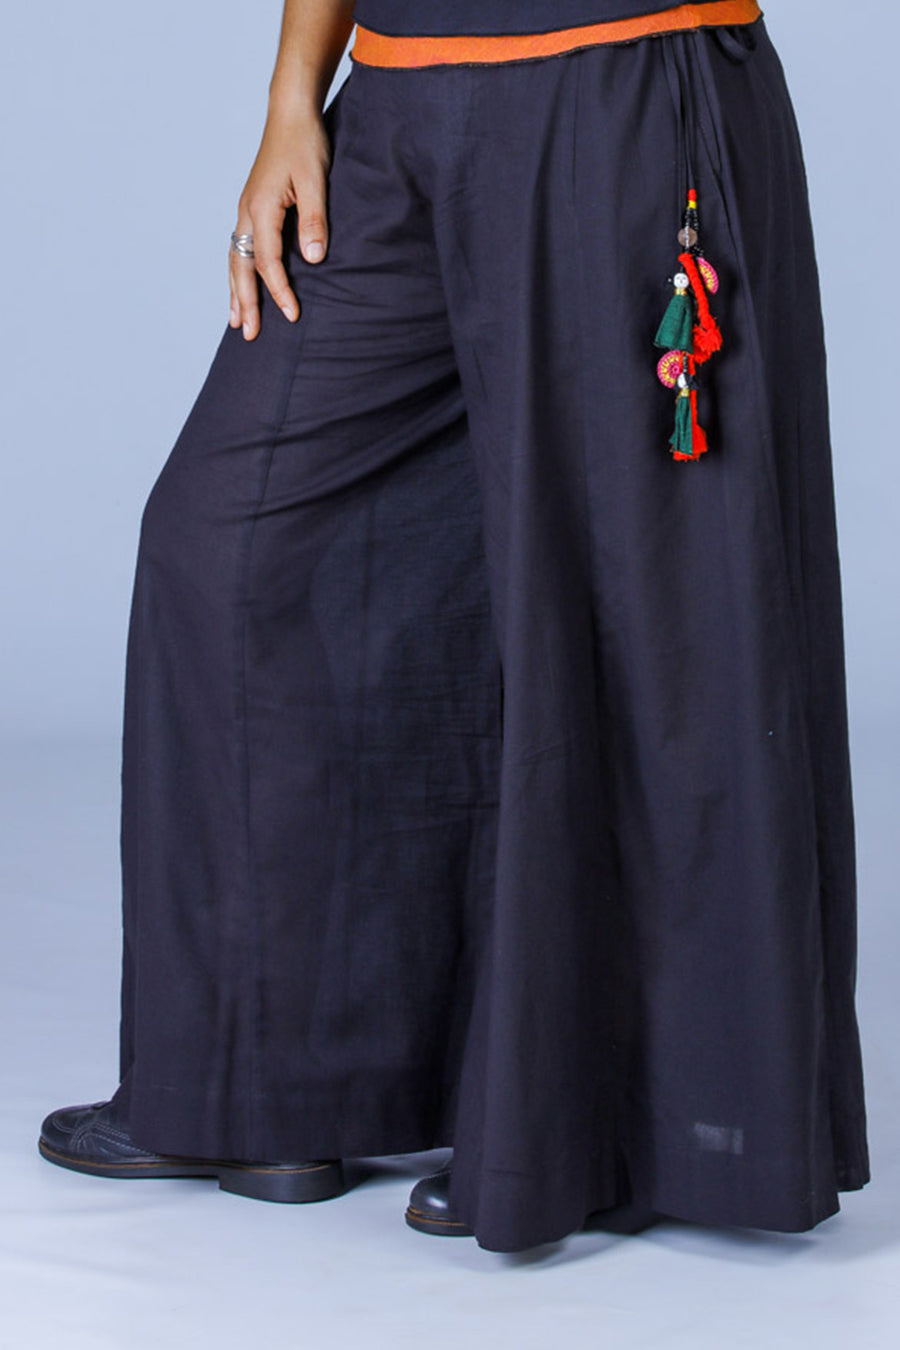 ESSSUT999 Palazzo Pants for women Cotton Solid Color Pants India | Ubuy